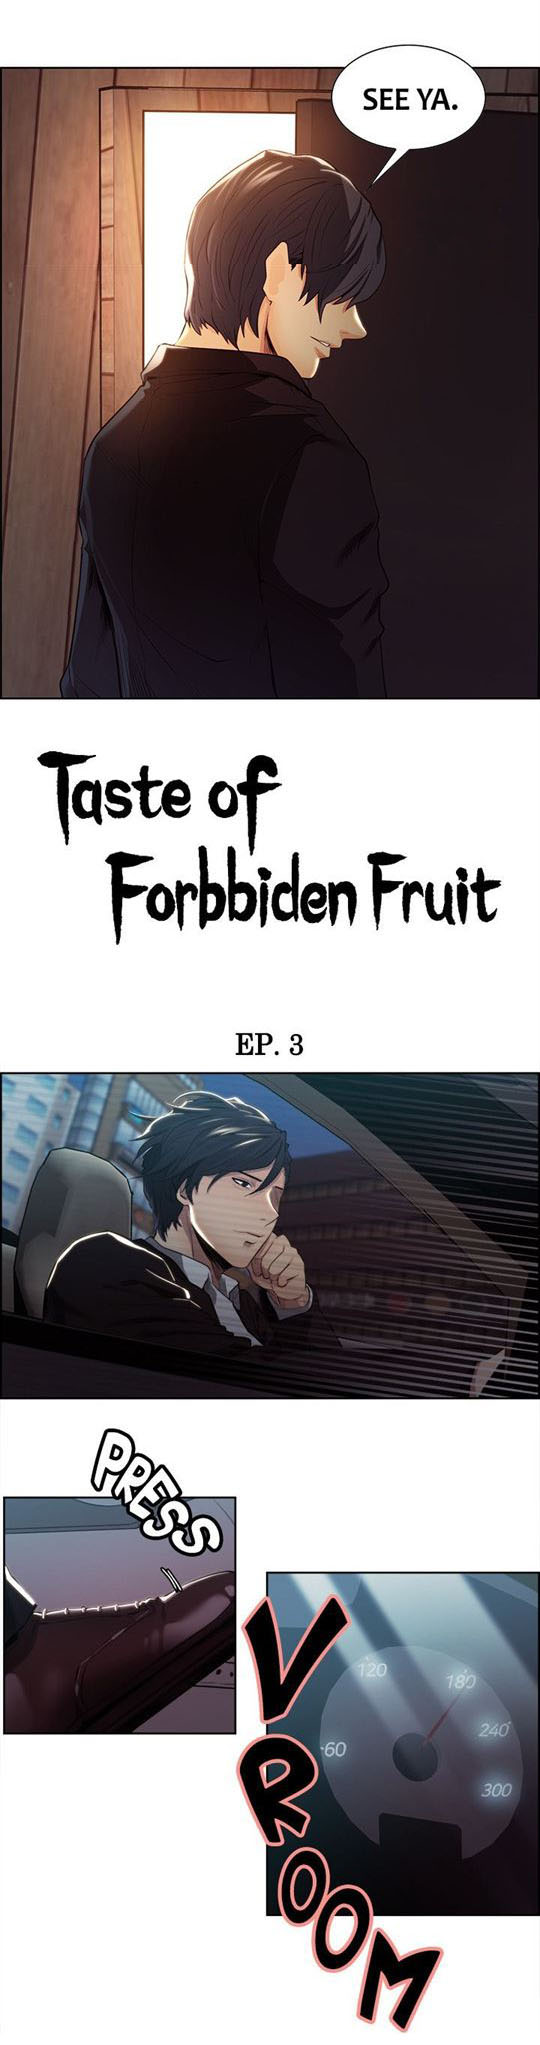 [Serious] Taste of Forbbiden Fruit Ch.7/24